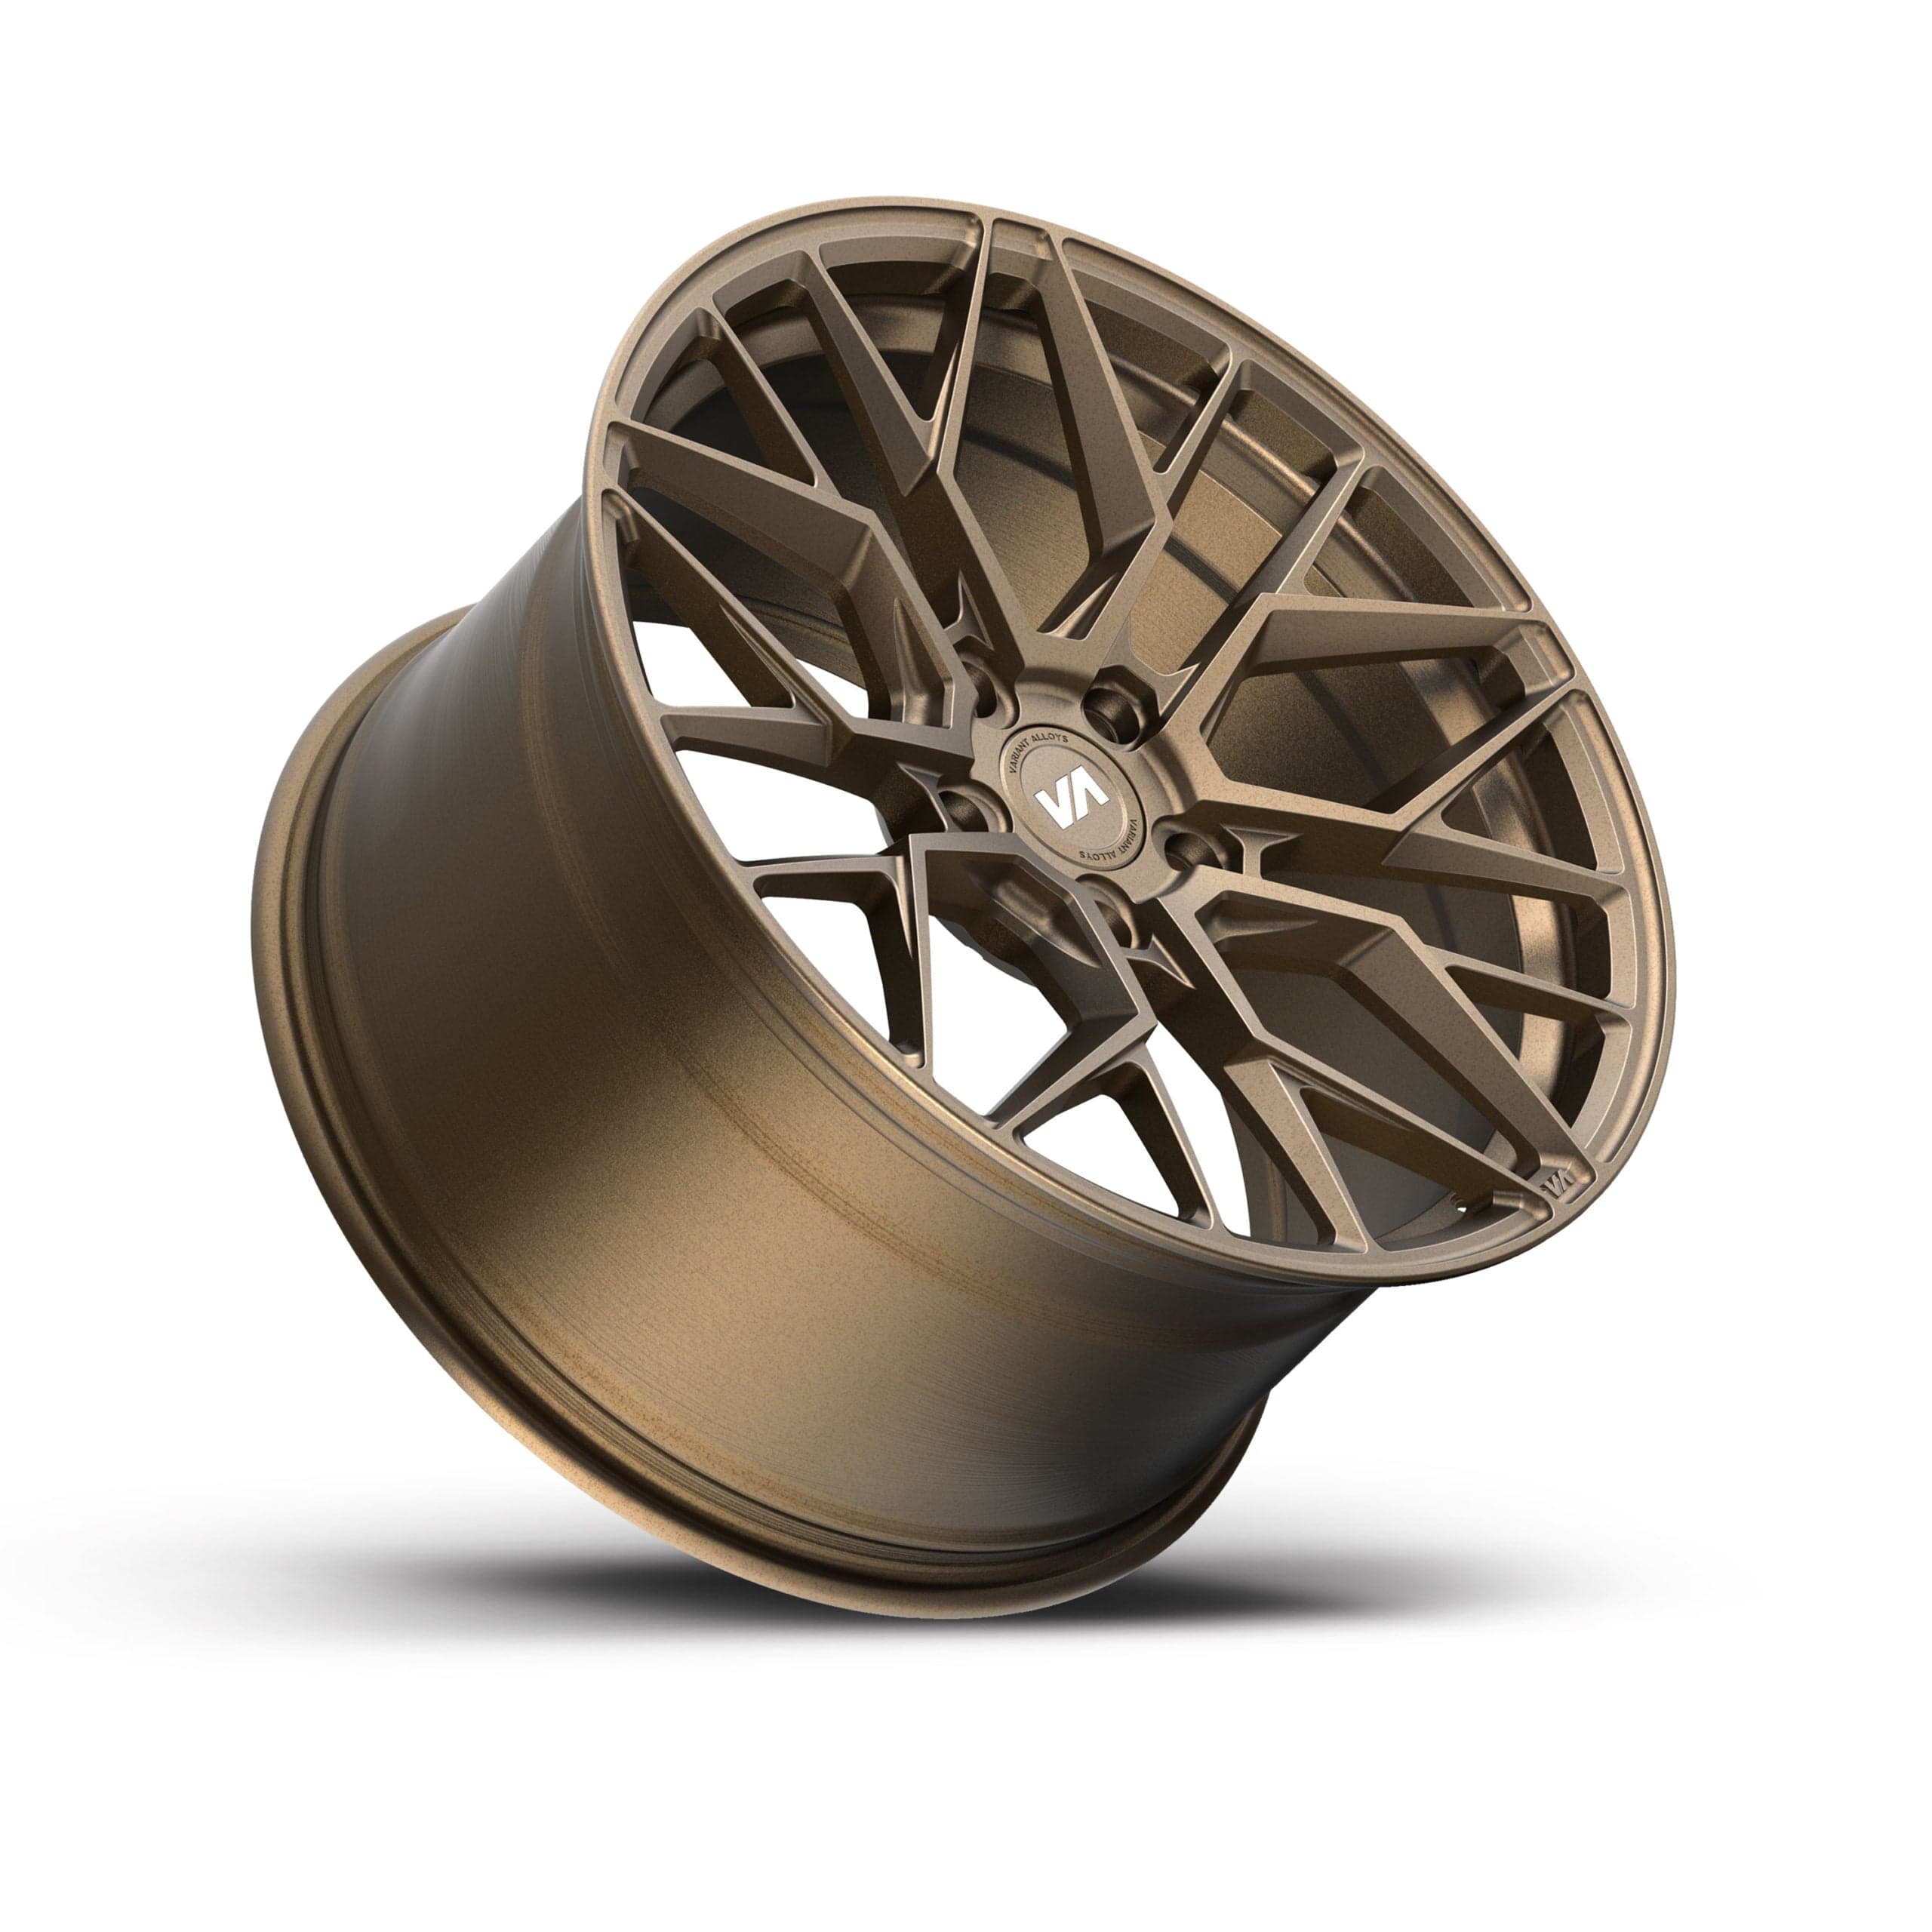 Kies-Motorsports Variant Variant Radon Satin Bronze Wheels